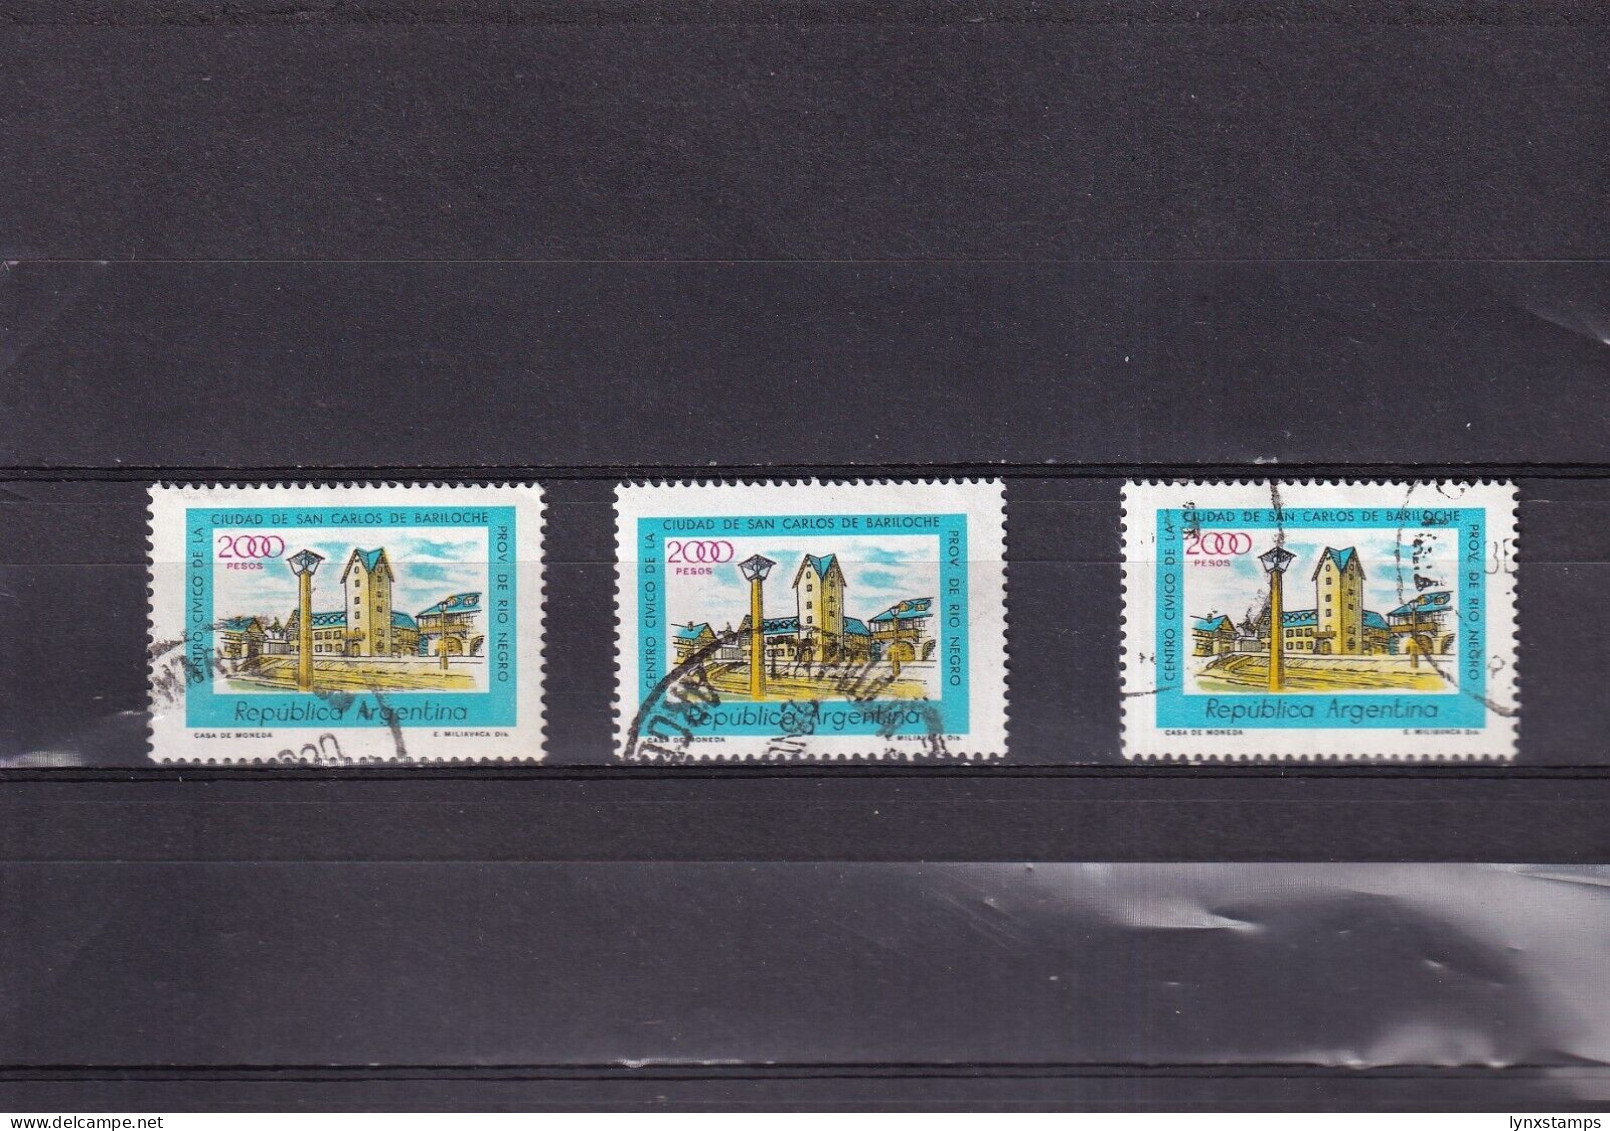 ER03 Argentina 1980 Civil Center, Bariloche Used Stamp - Used Stamps